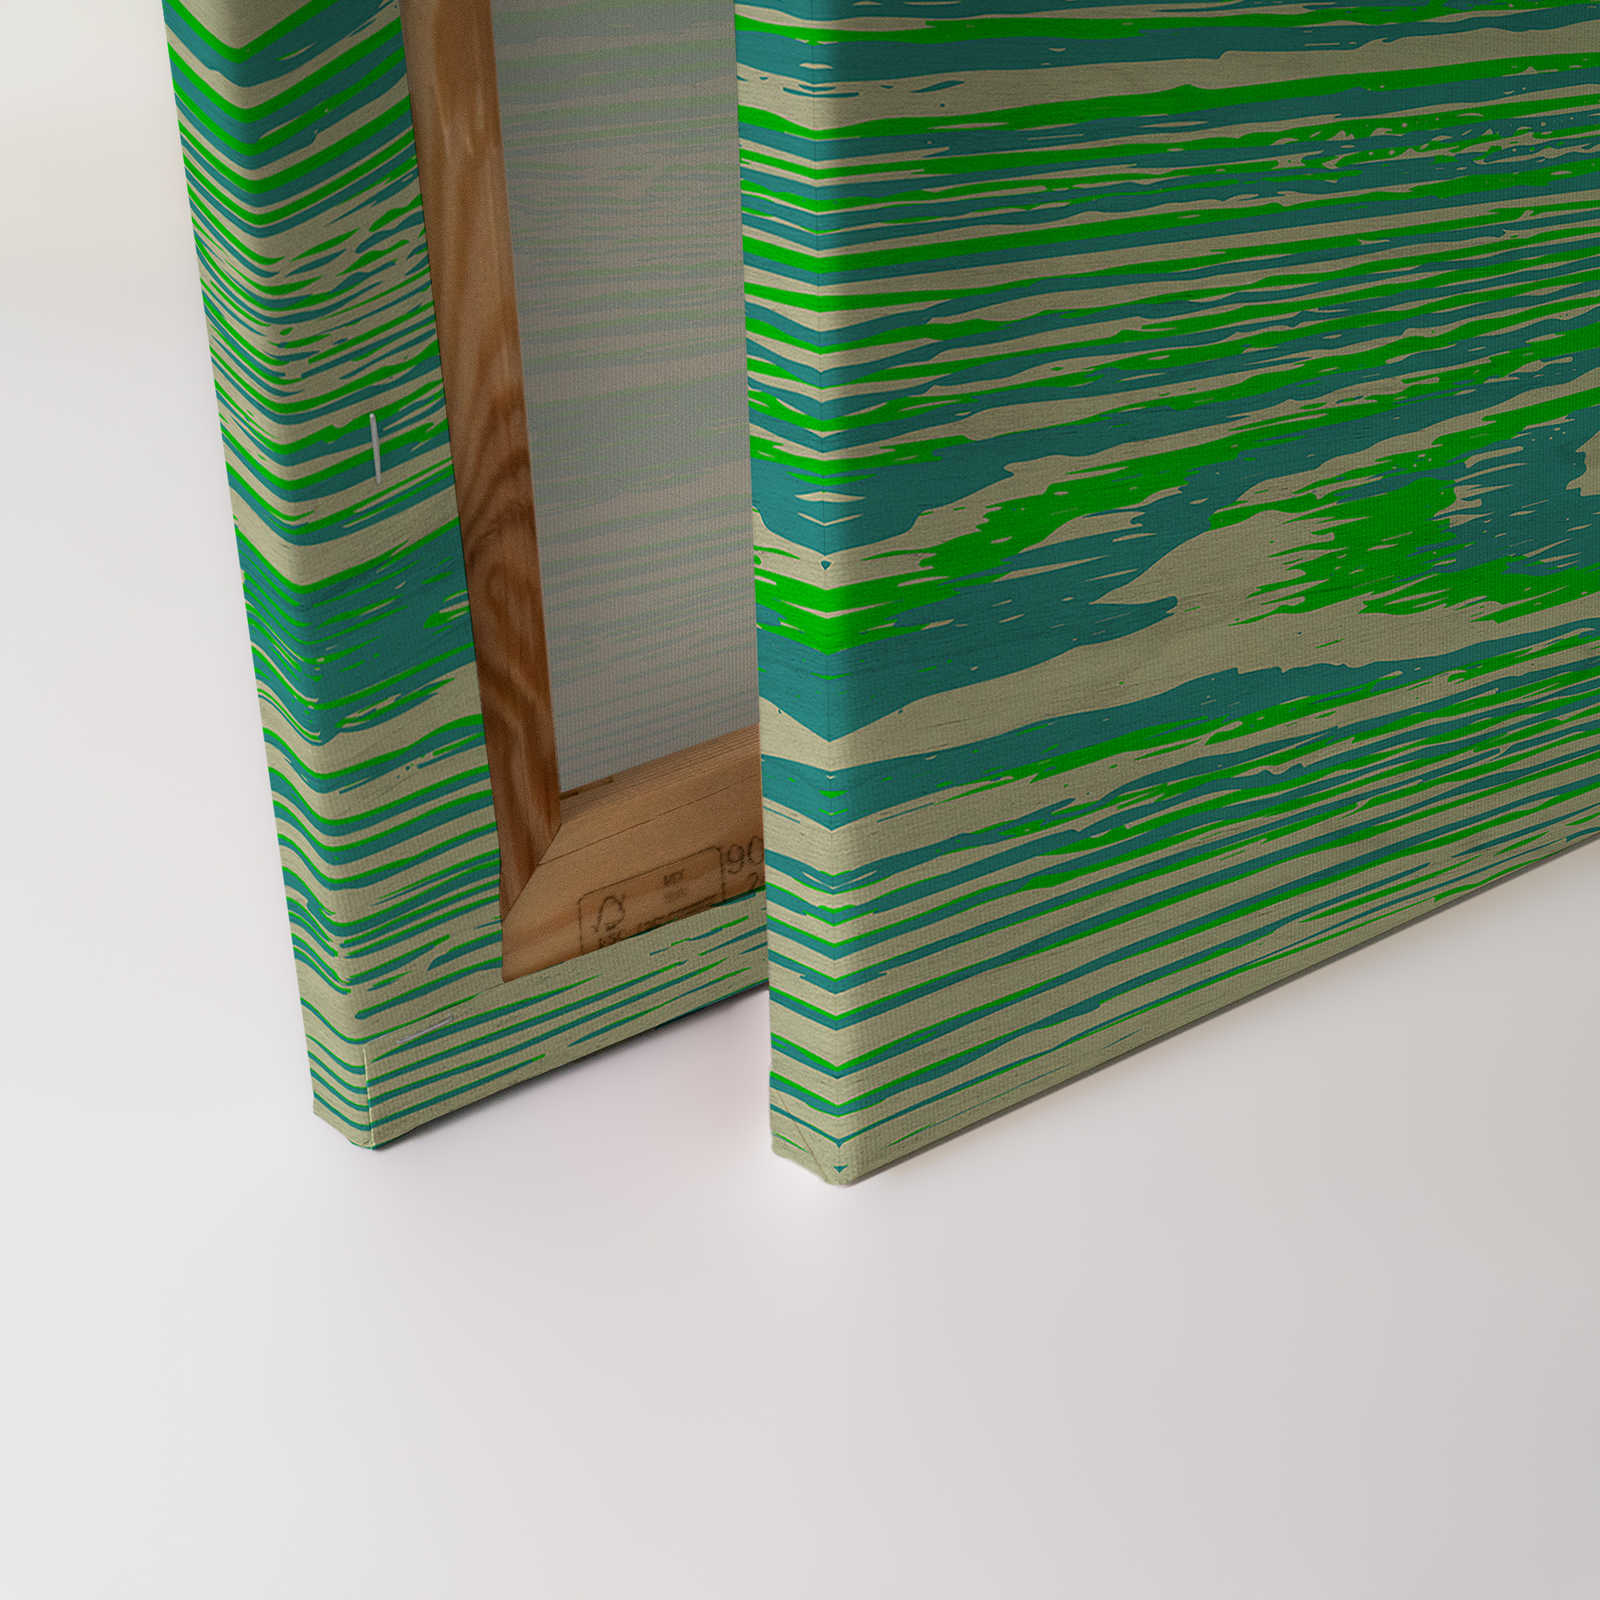             Bounty 1 - Neongrünes Leinwandbild Holzoptik Design – 1,20 m x 0,80 m
        